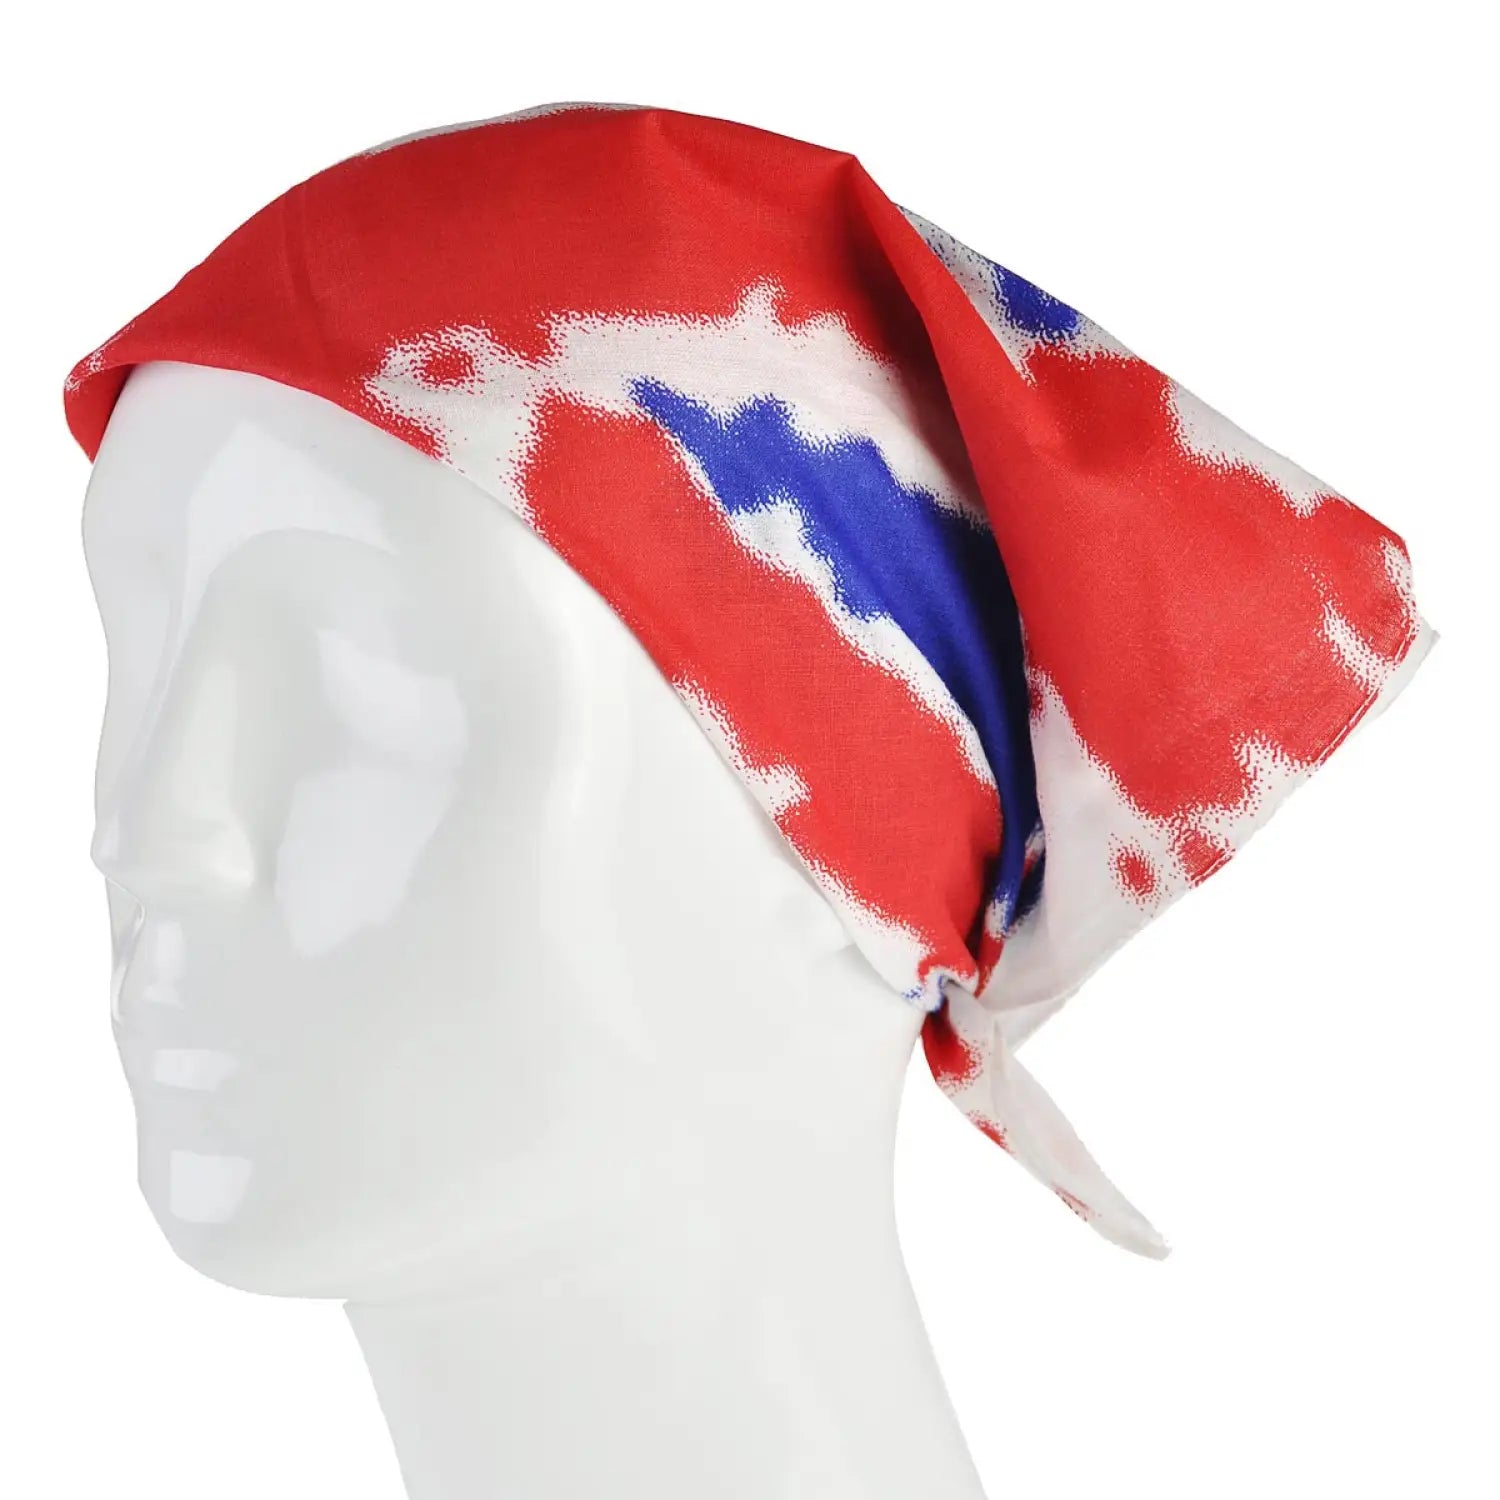 Union Jack Print Headband - Red, White, and Blue British Style